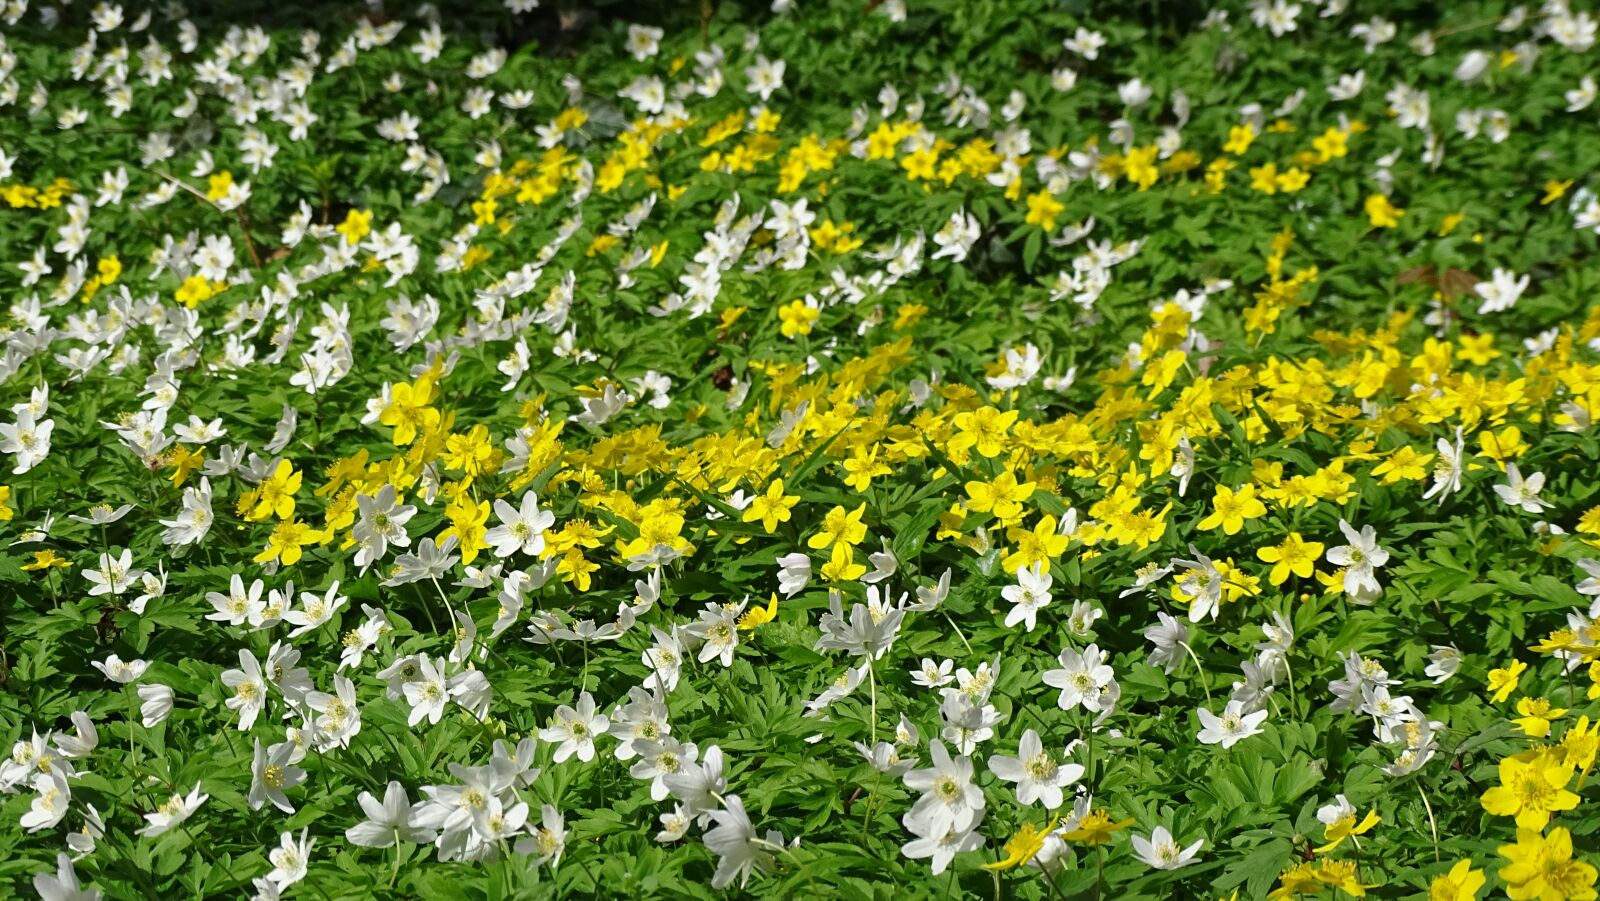 Sony Cyber-shot DSC-HX350 sample photo. Flower, plant, nature photography